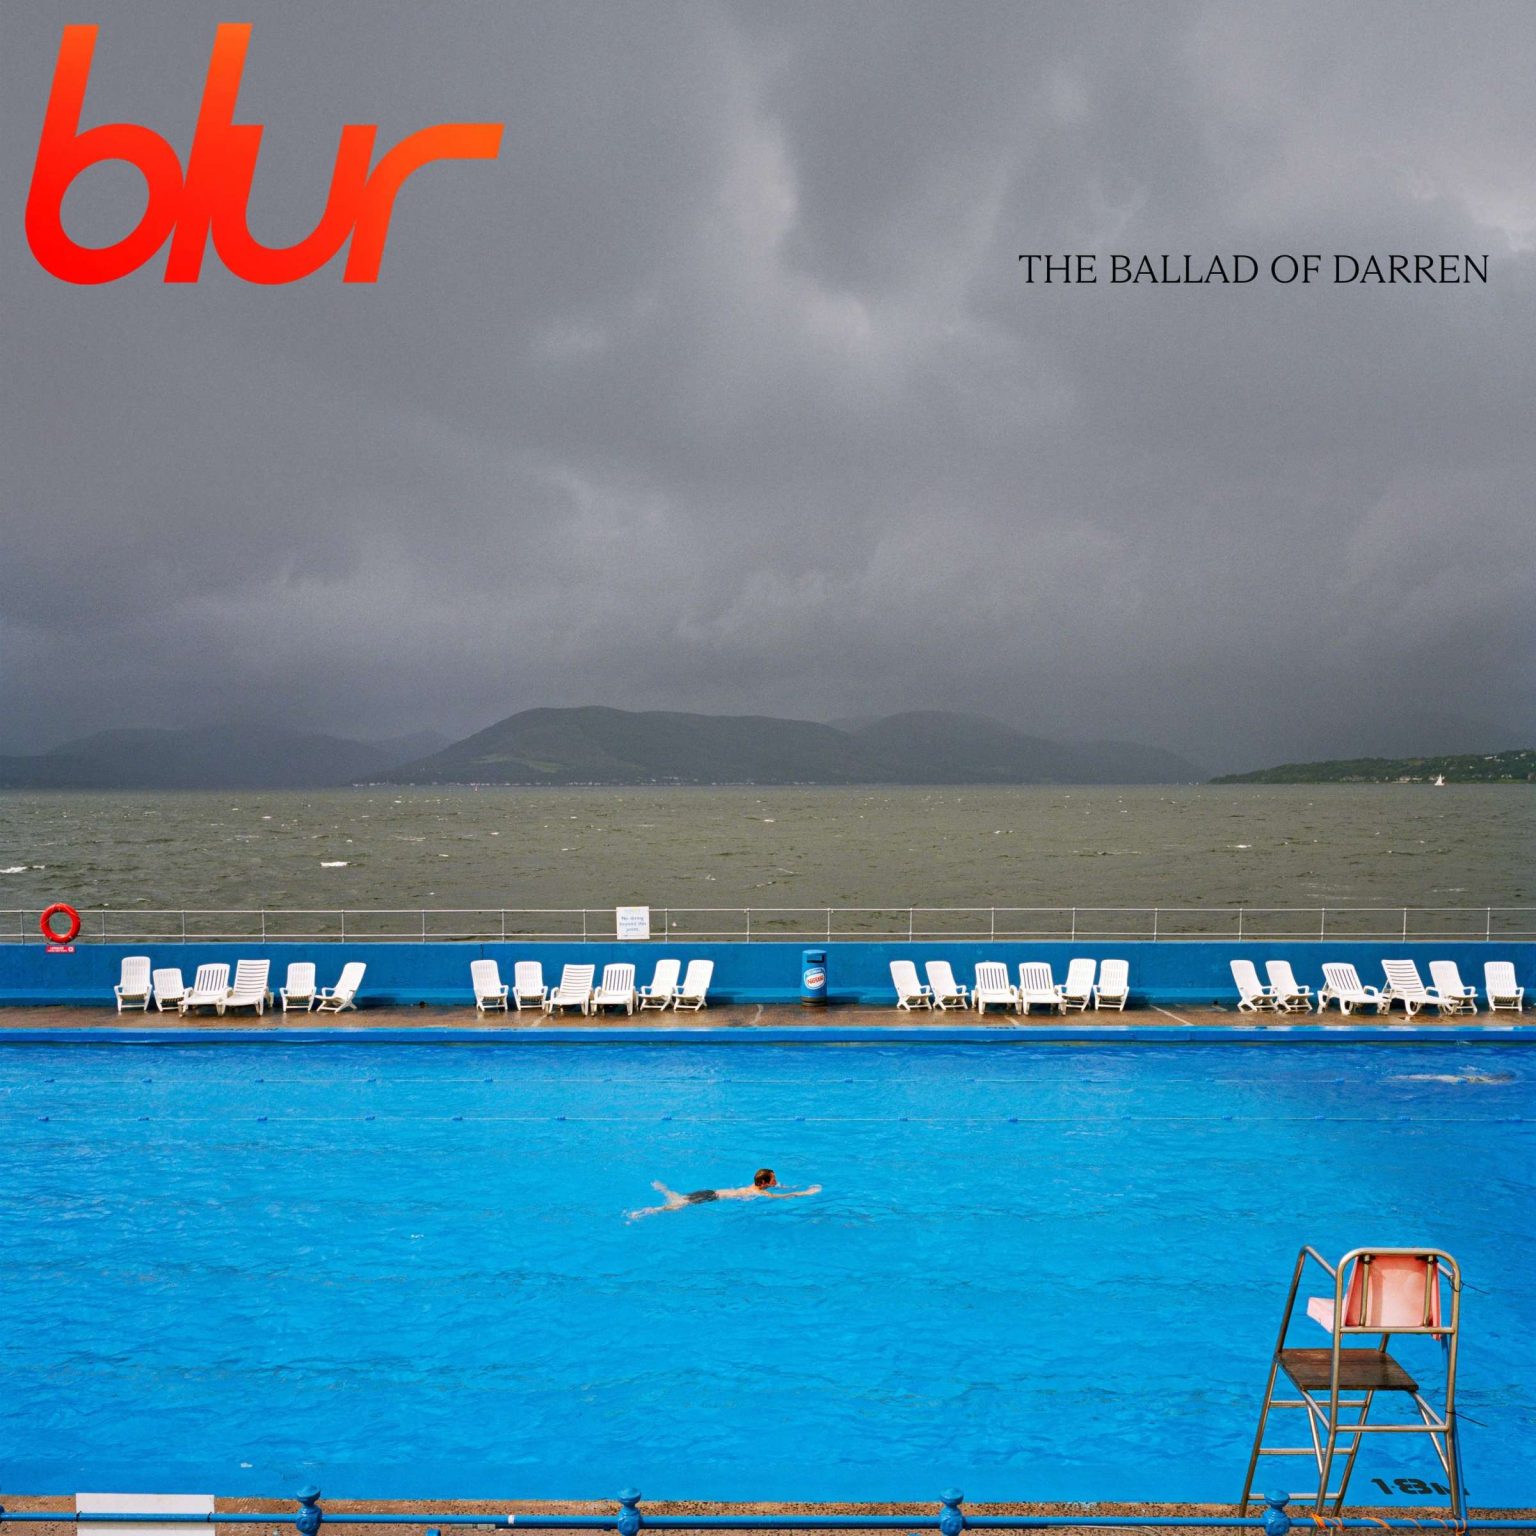 Okładka płyty winylowej artysty Blur o tytule The Ballad Of Darren